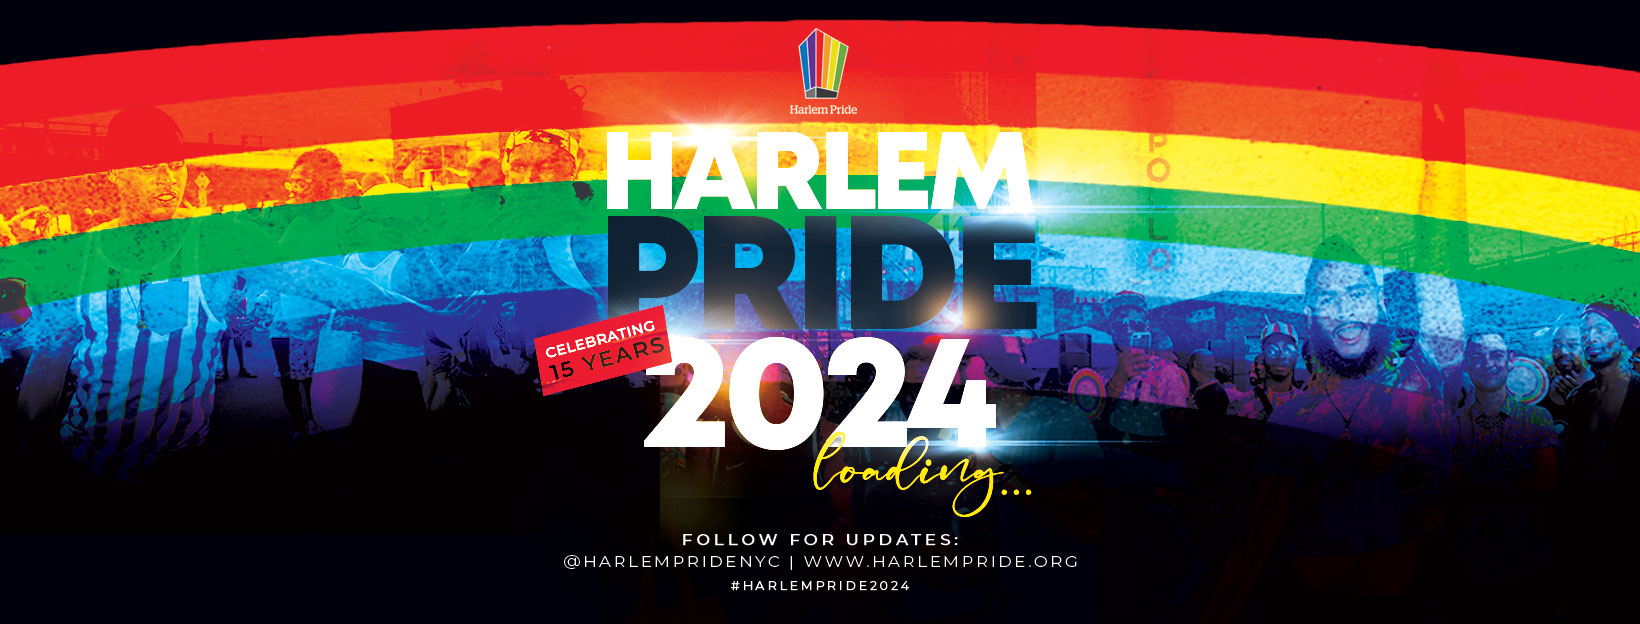 Harlem Pride 2024 Celebration Day cover image